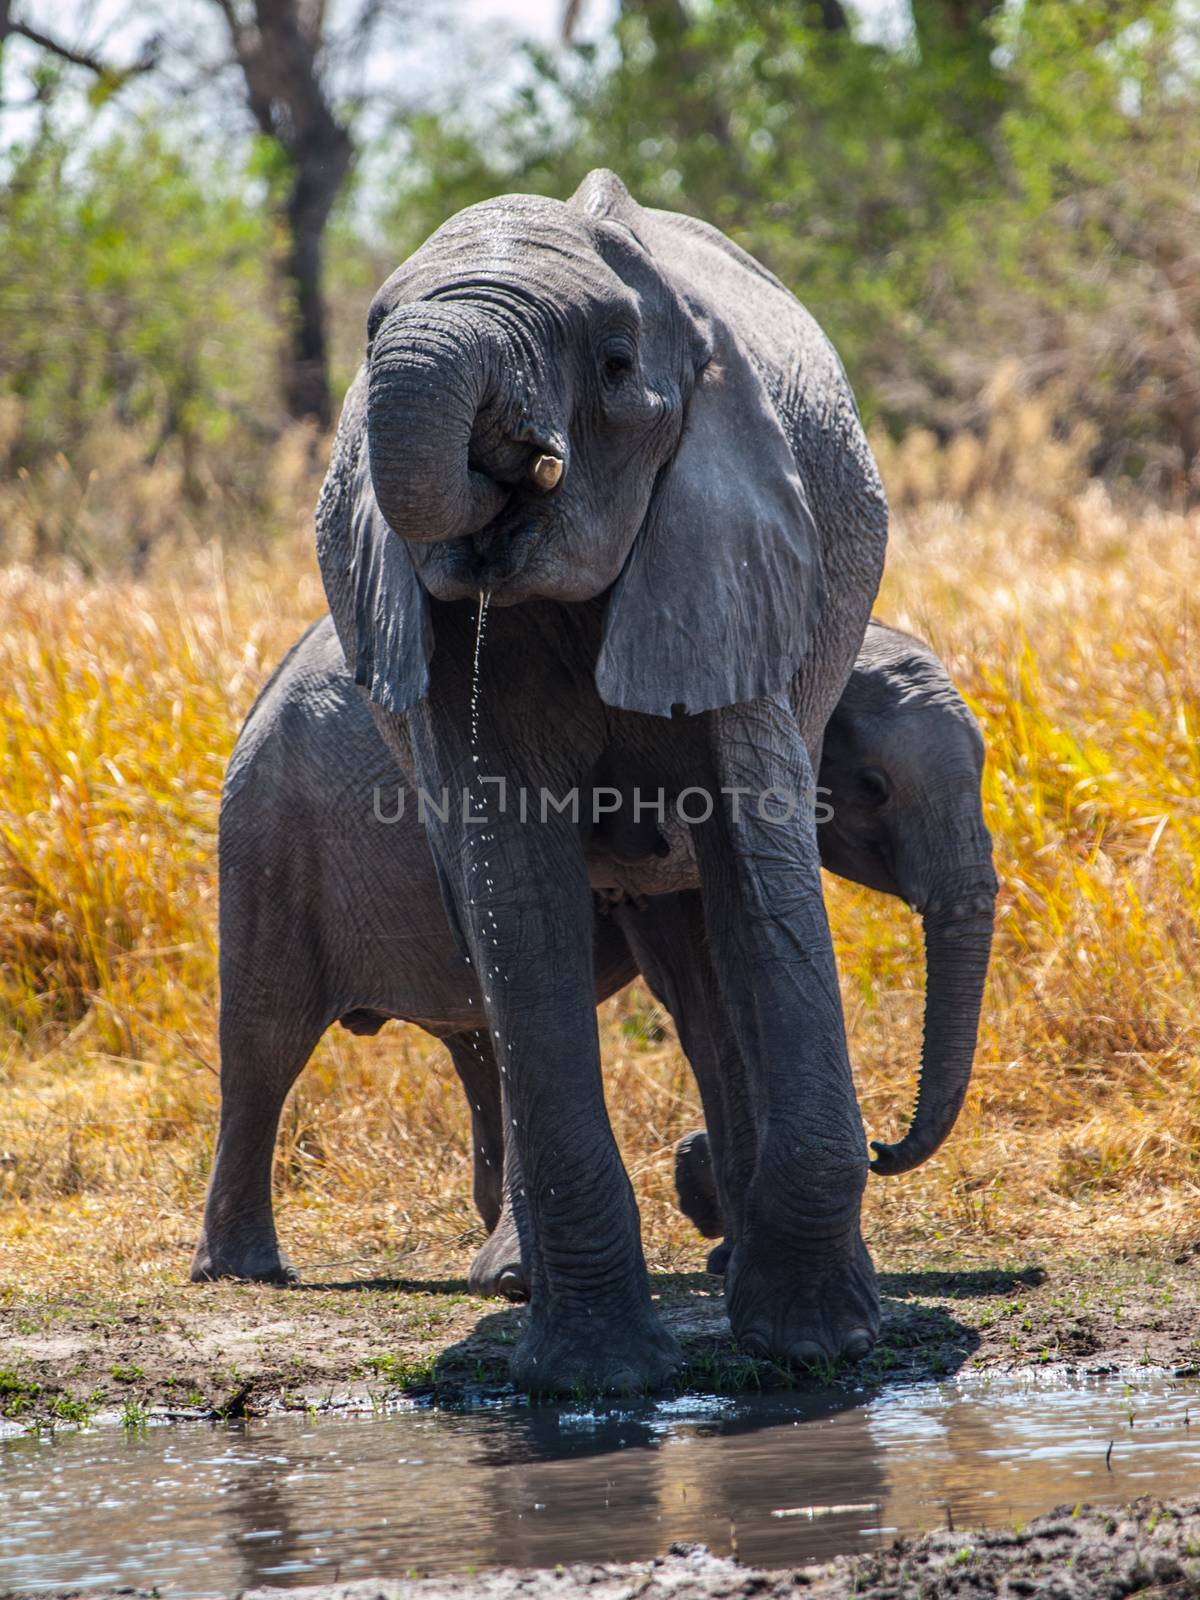 Two african elephants at water hole (Okavango region, Botswana)